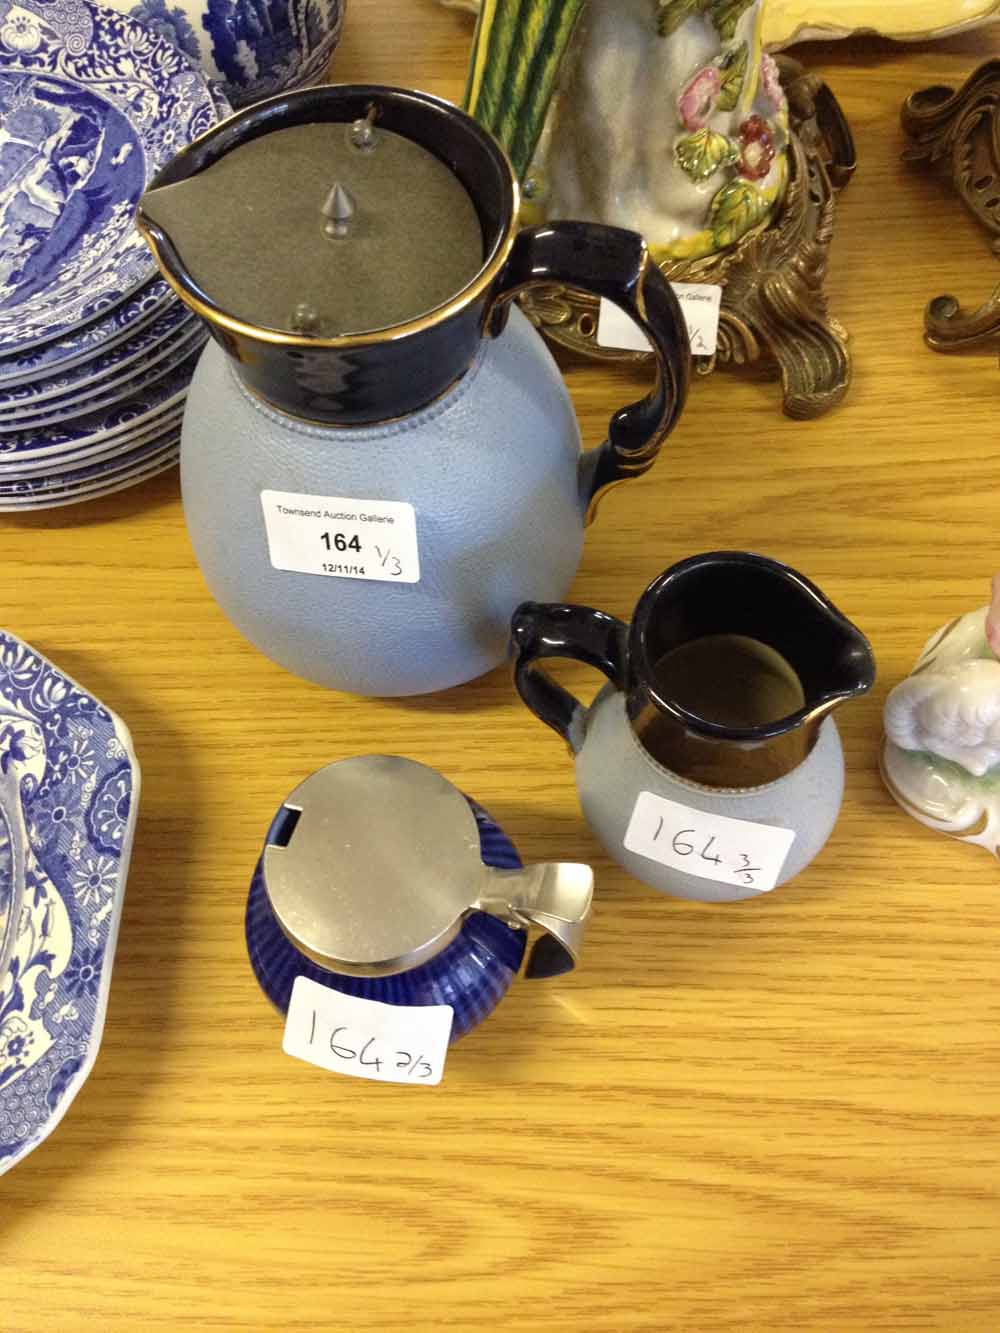 2 stoneware jugs and a smaller ceramic jug.